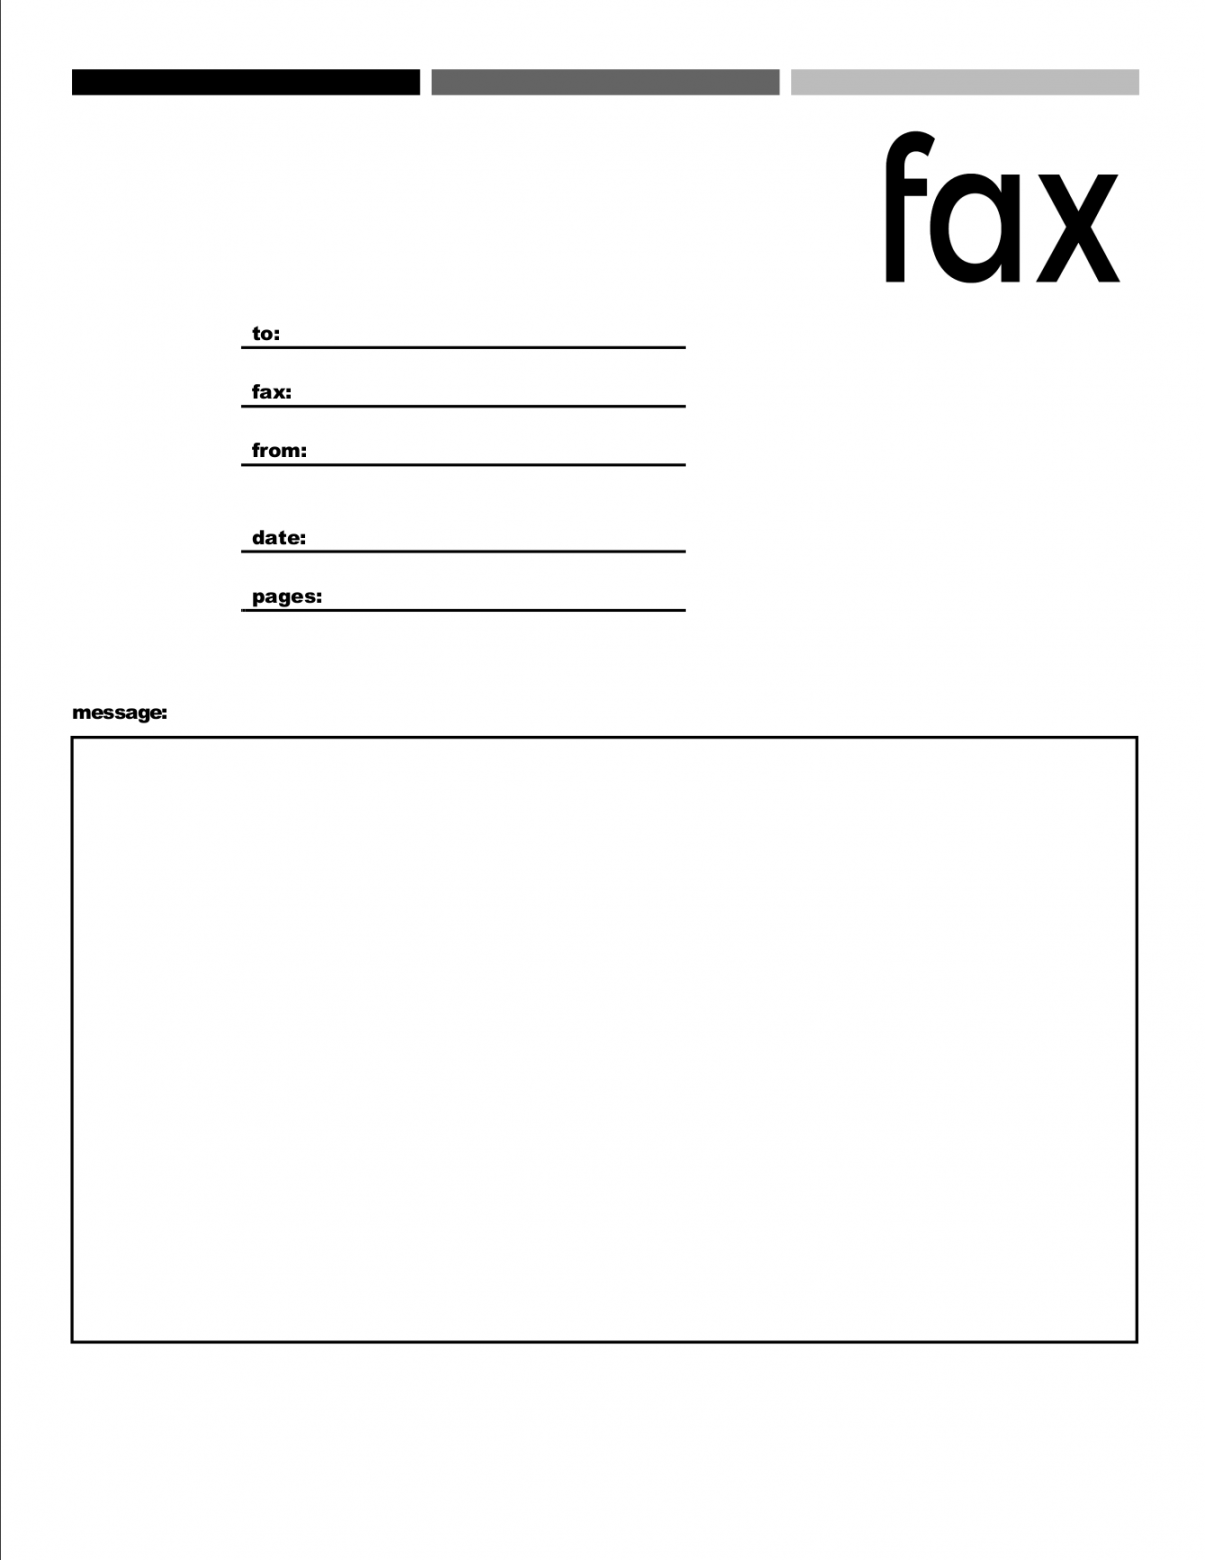 Free Fax Cover Sheet Printable - Printable - Free Fax Cover Sheets  FaxBurner